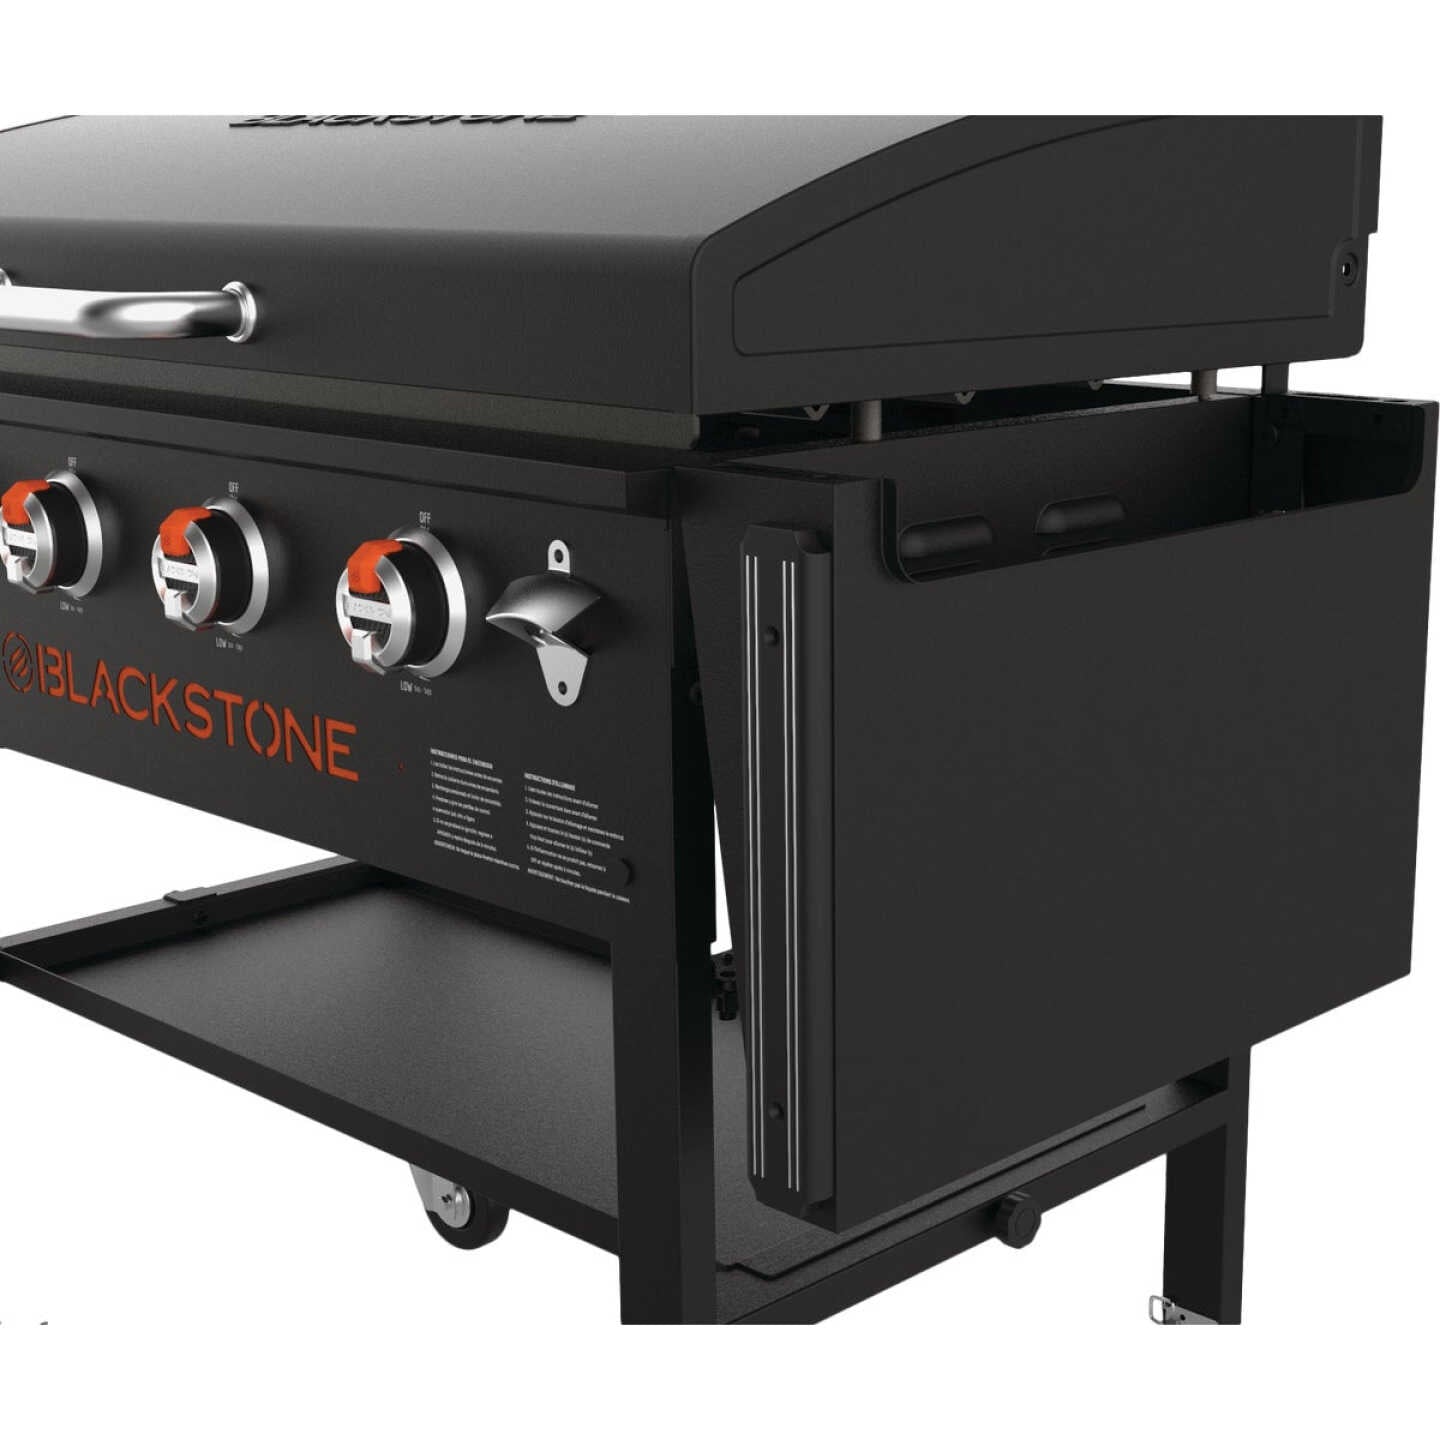 Blackstone 4-Burner 36" Gas Griddle with Hood Blackstone Indigo Pool Patio BBQ